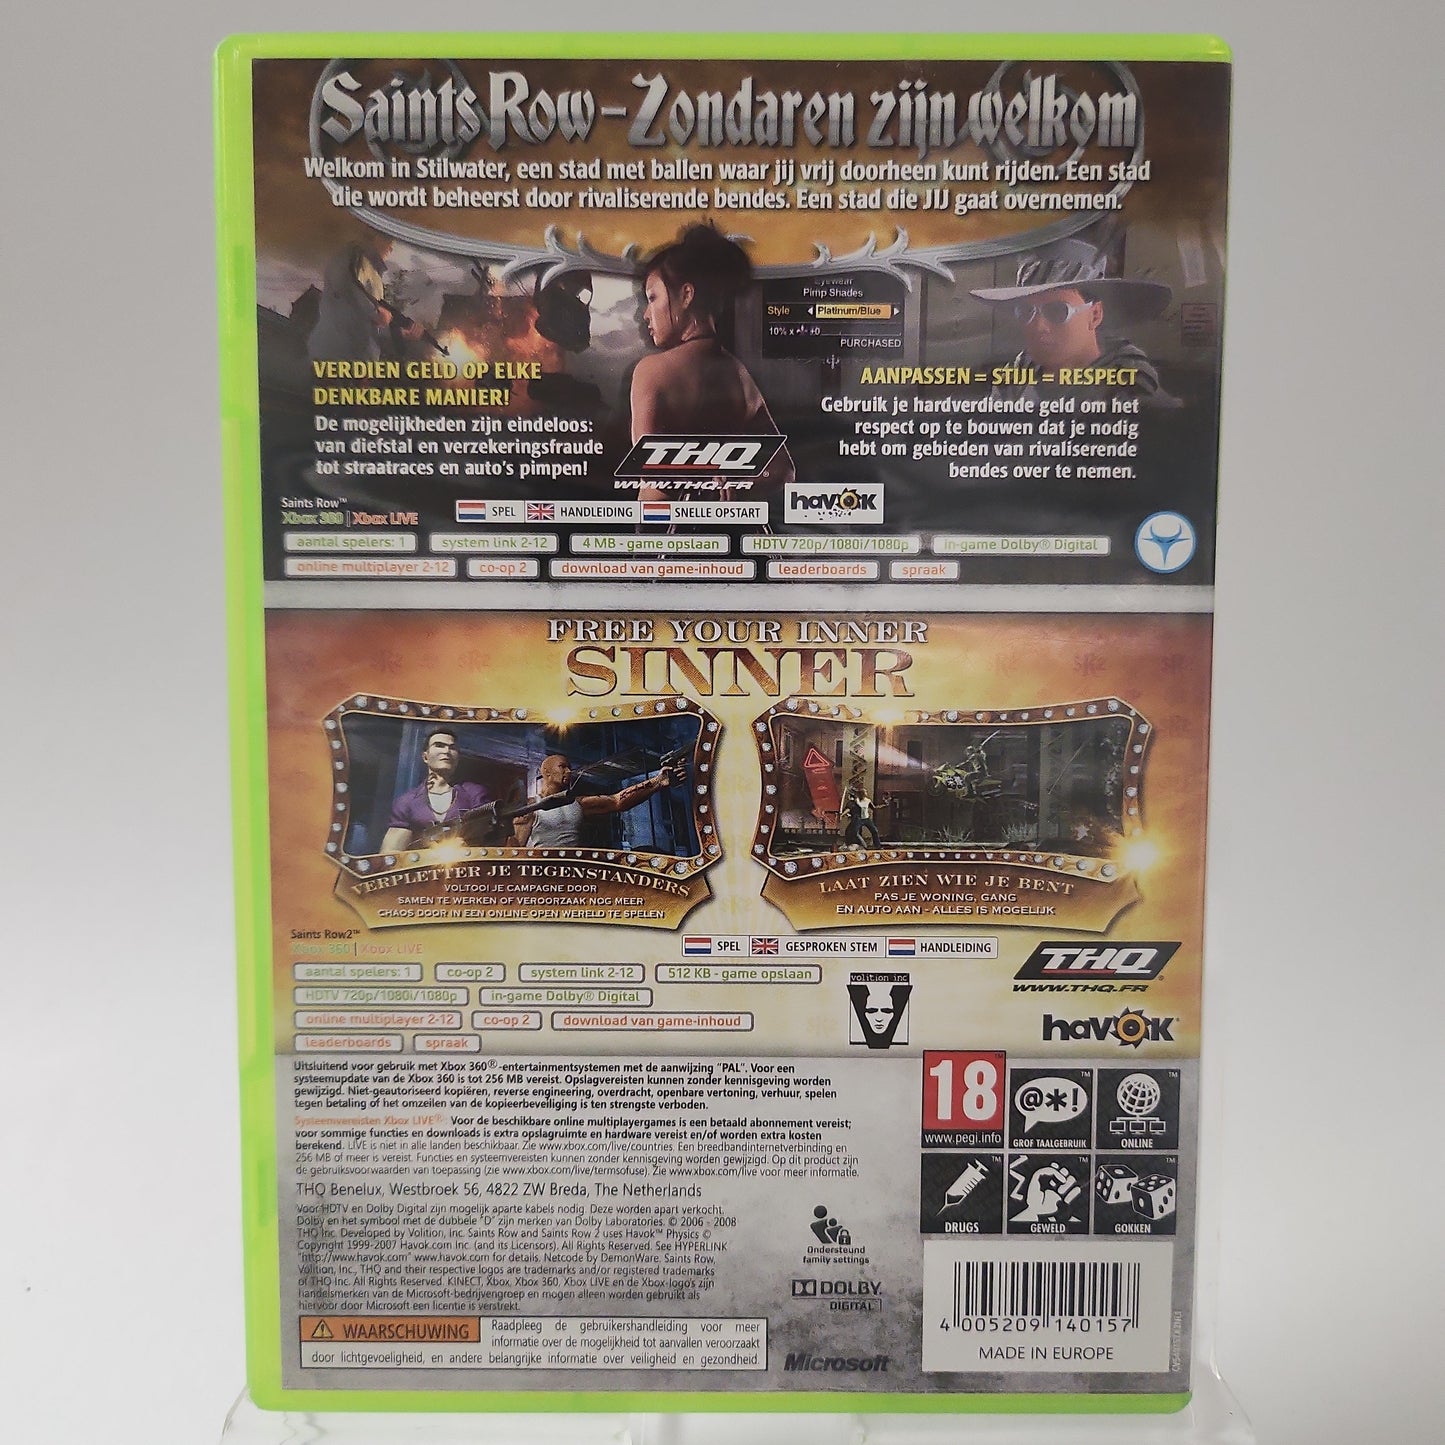 Saints Row & Saints Row 2 Double Pack Xbox 360